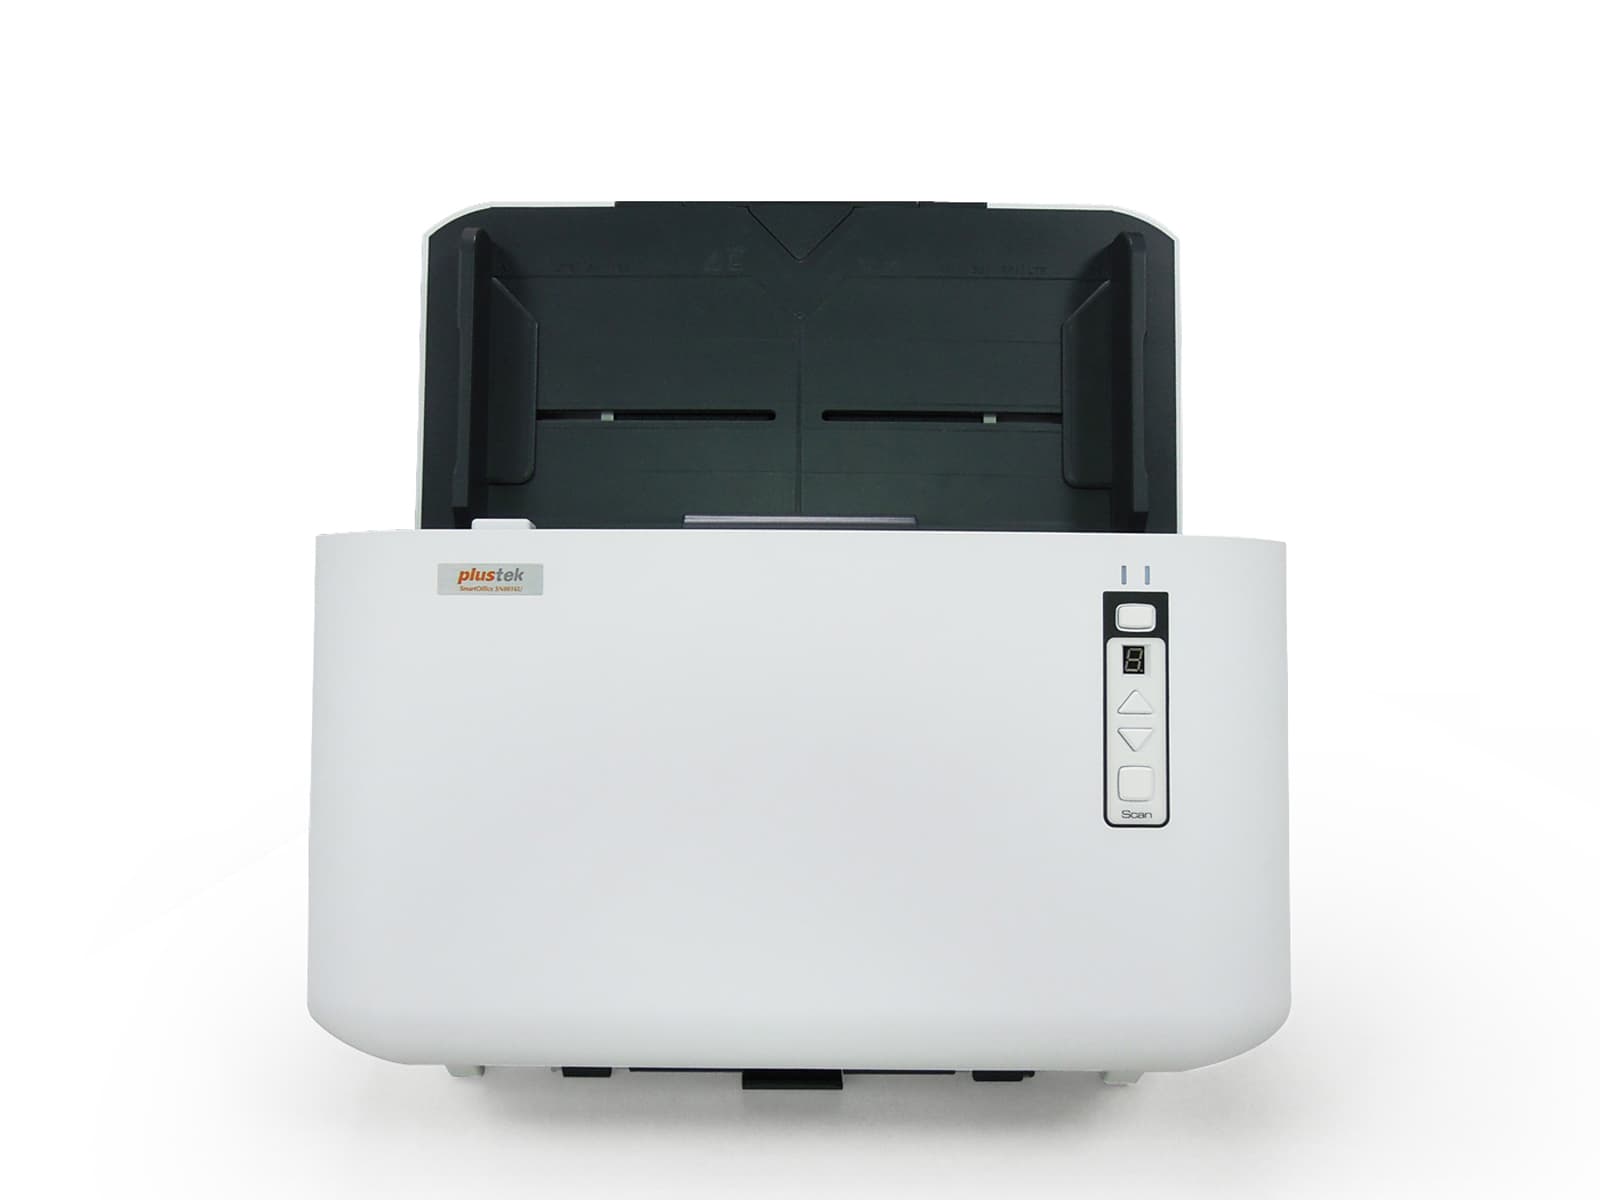 Сканер протяжный Plustek SmartOffice SN8016U, A3, CIS, 600x600dpi, ДАПД 100 листов, ч/б 80 стр/мин, 160 изобр./мин,цв. 55 стр/мин, 110 изобр./мин, 48 бит, 24 бит, сетевой, USB 2.0 (0243TS)